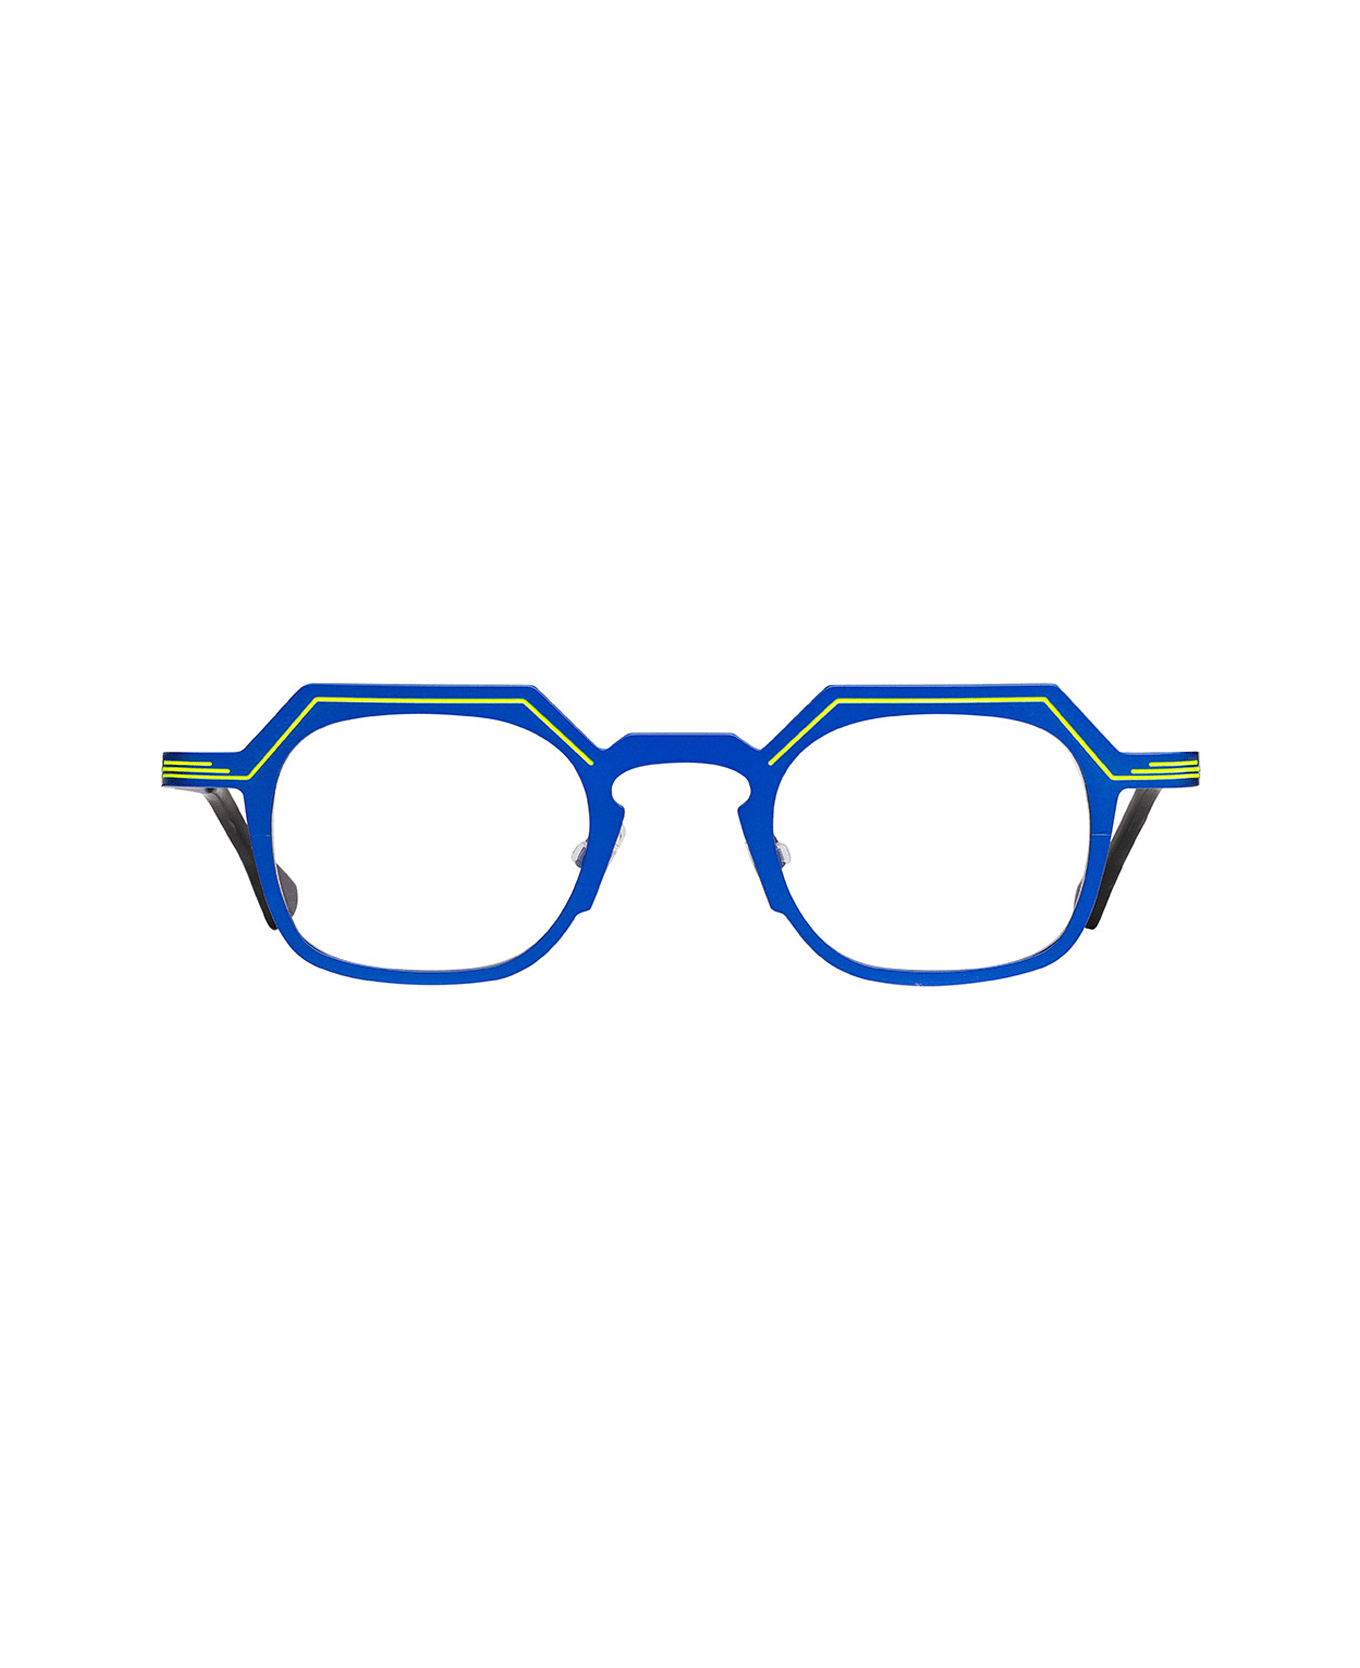 Matttew Delta Glasses - Blu アイウェア